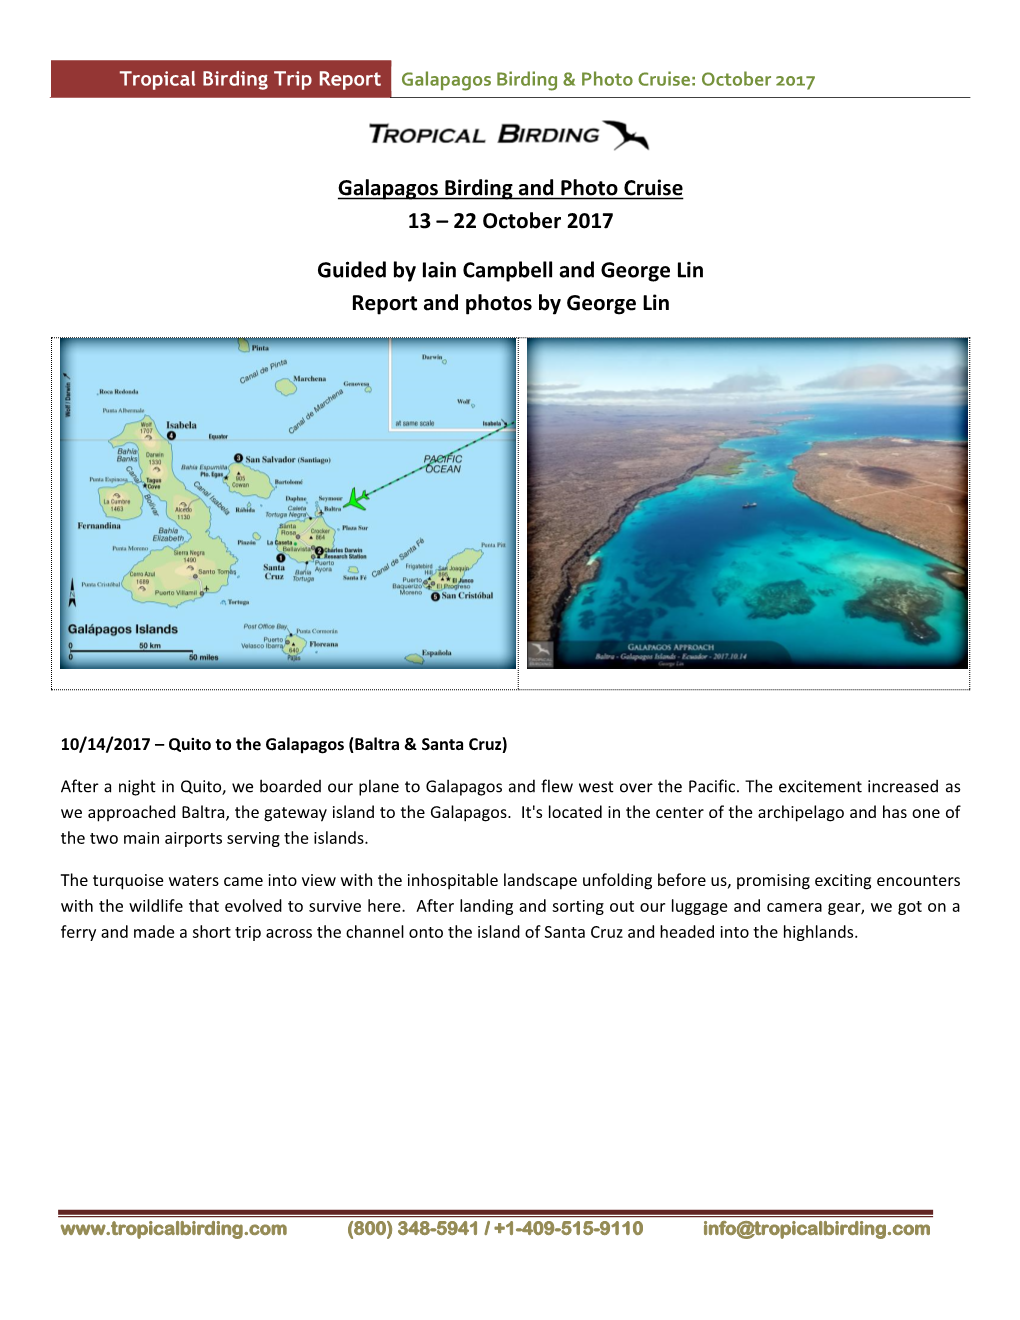 Galapagos Birding and Photo Cruise 13 – 22 October 2017